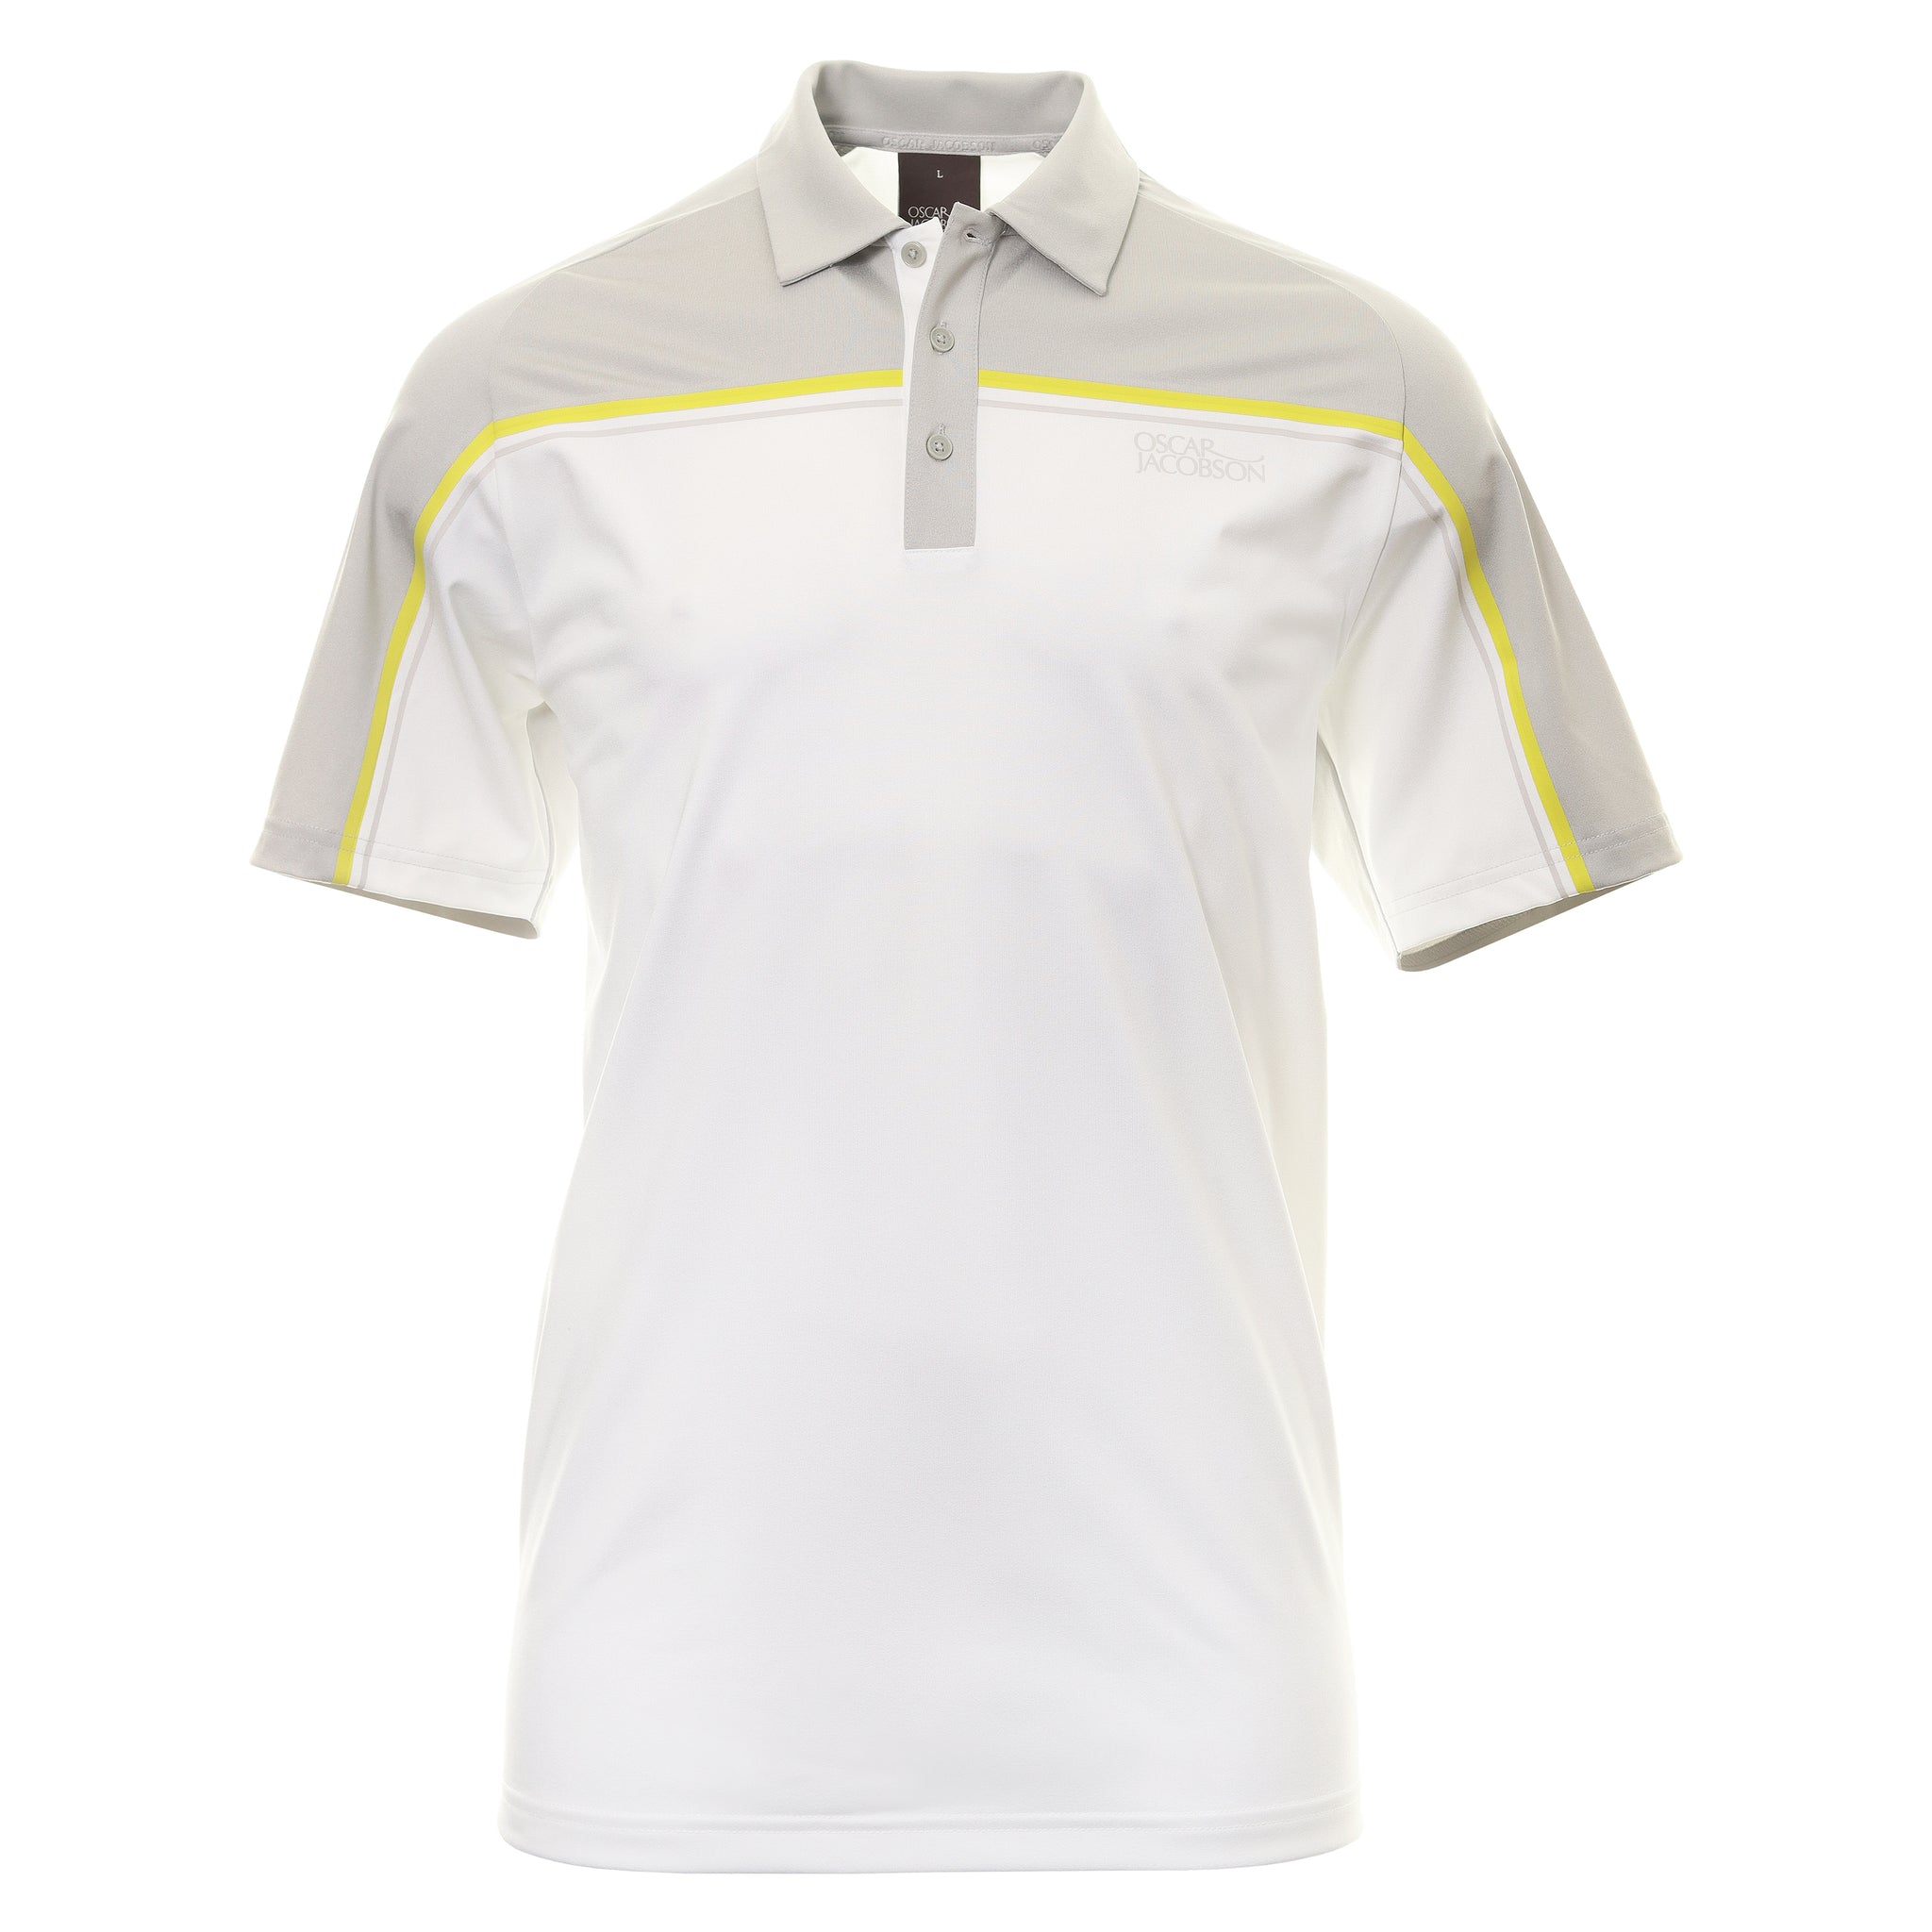 oscar-jacobson-gilman-shirt-ojts0135-lunar-grey-white-function18